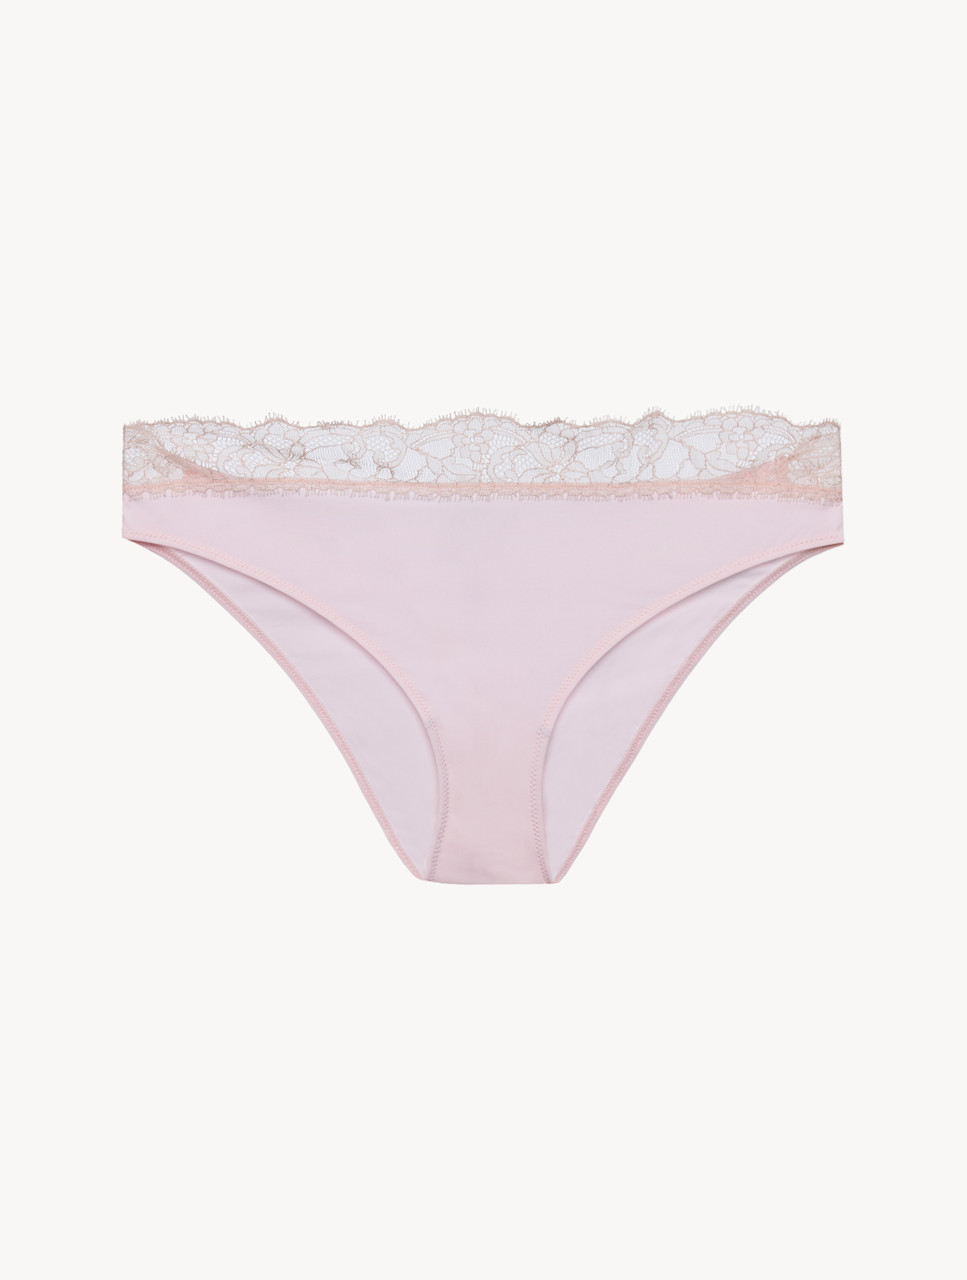 Lace medium brief in pink - La Perla - Global